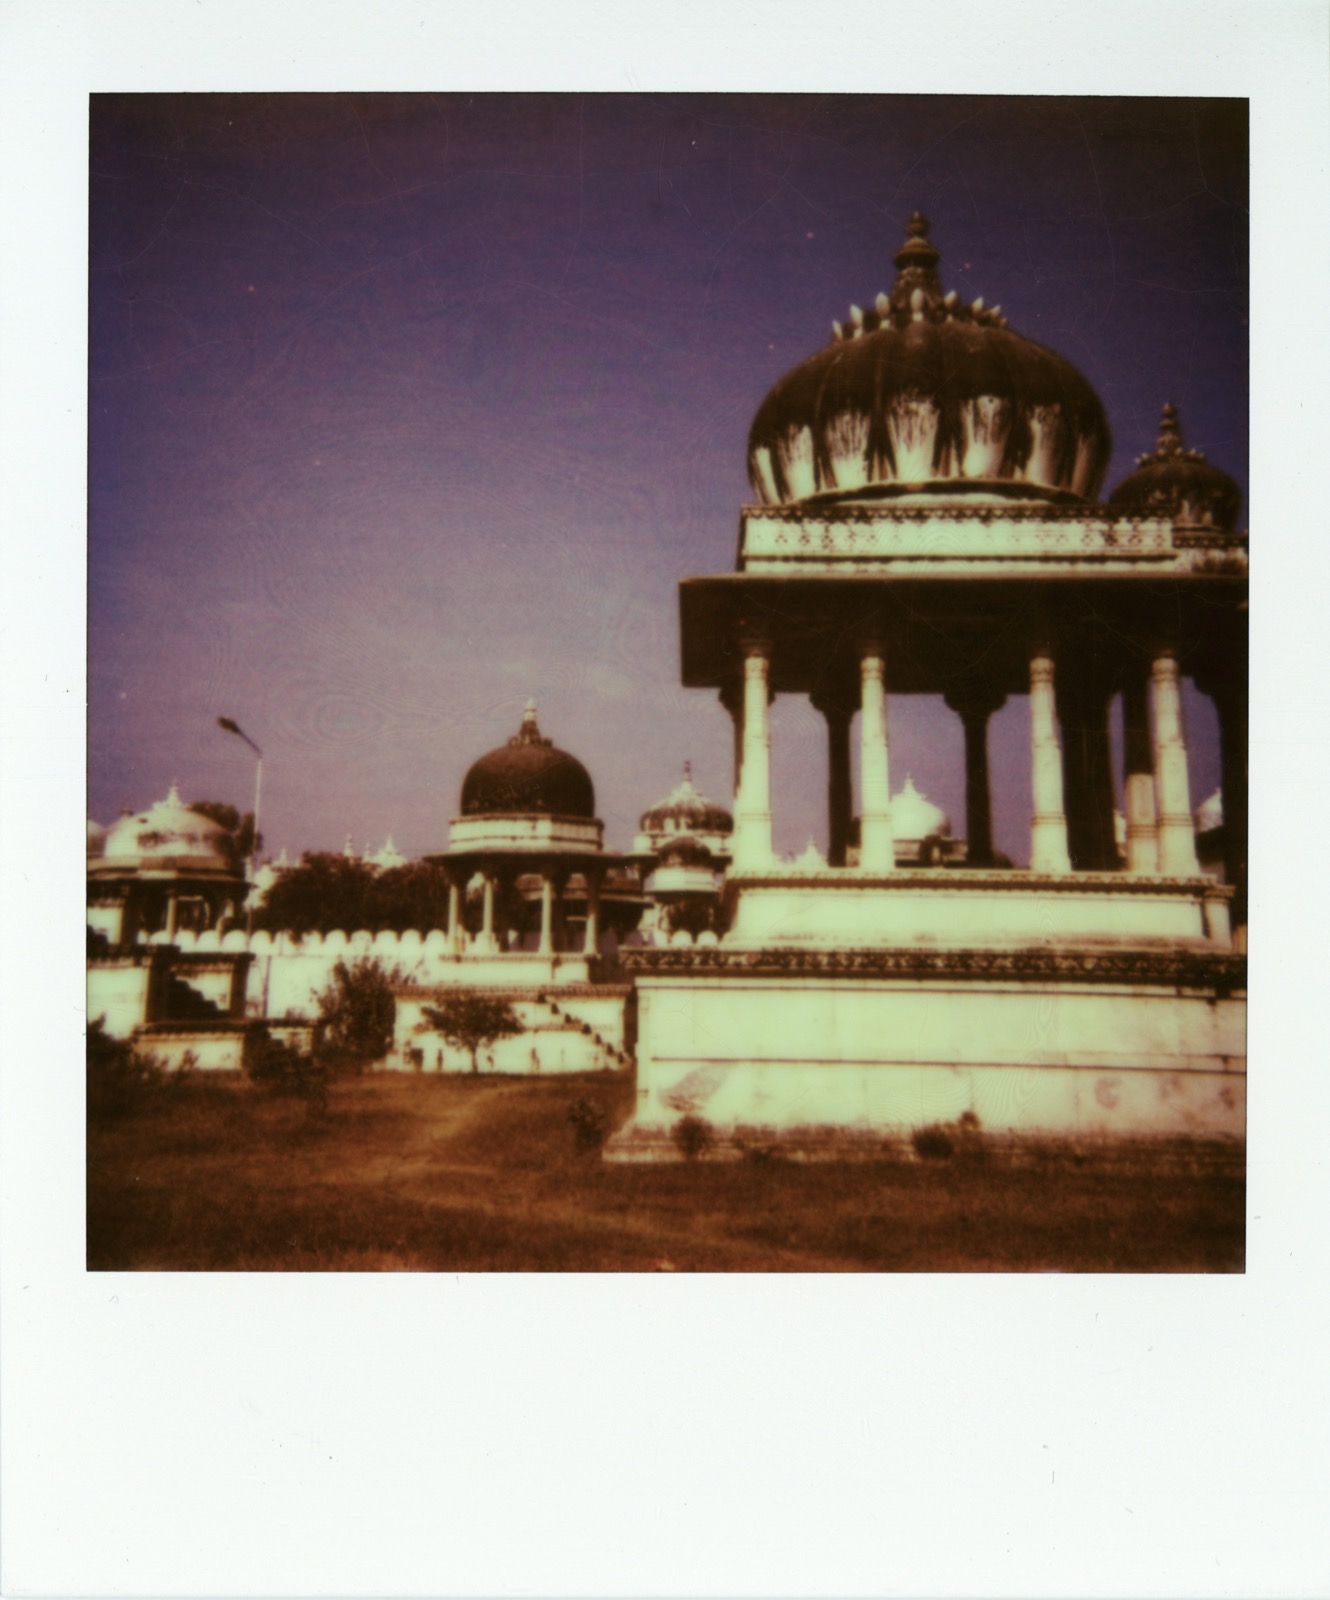 Maharadja Tombs